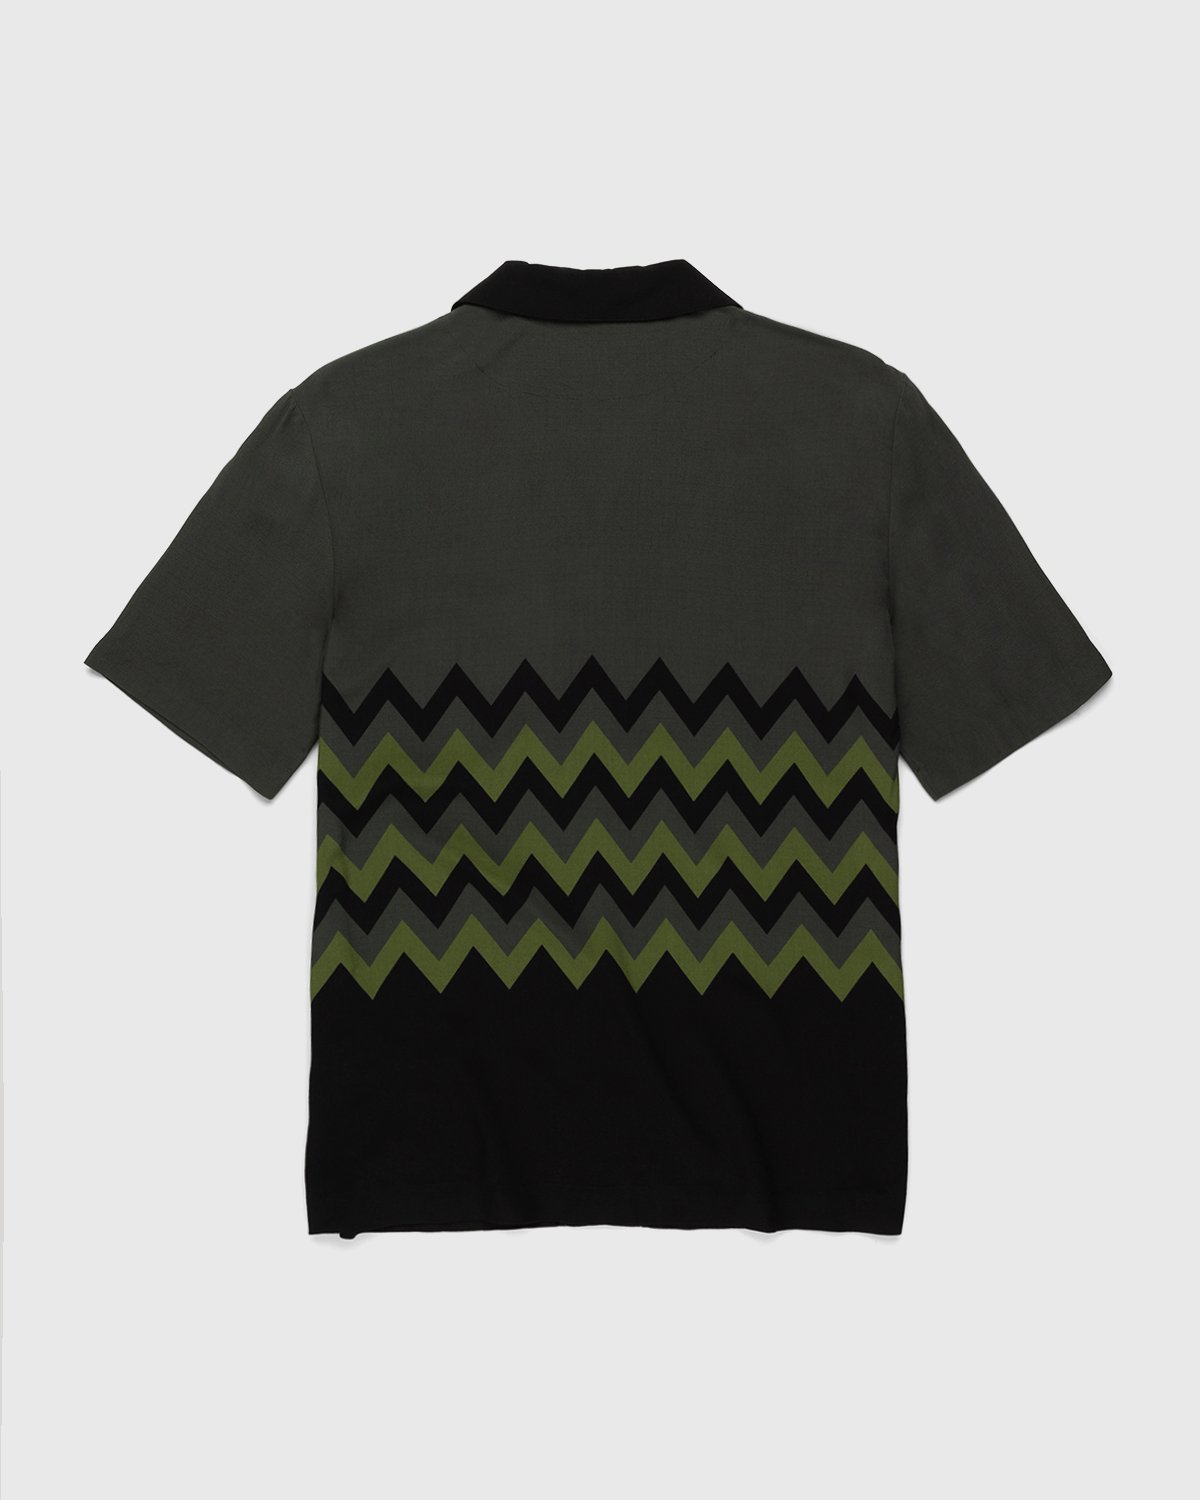 Missoni - Zig Zag Camp Shirt Green - Clothing - Multi - Image 2